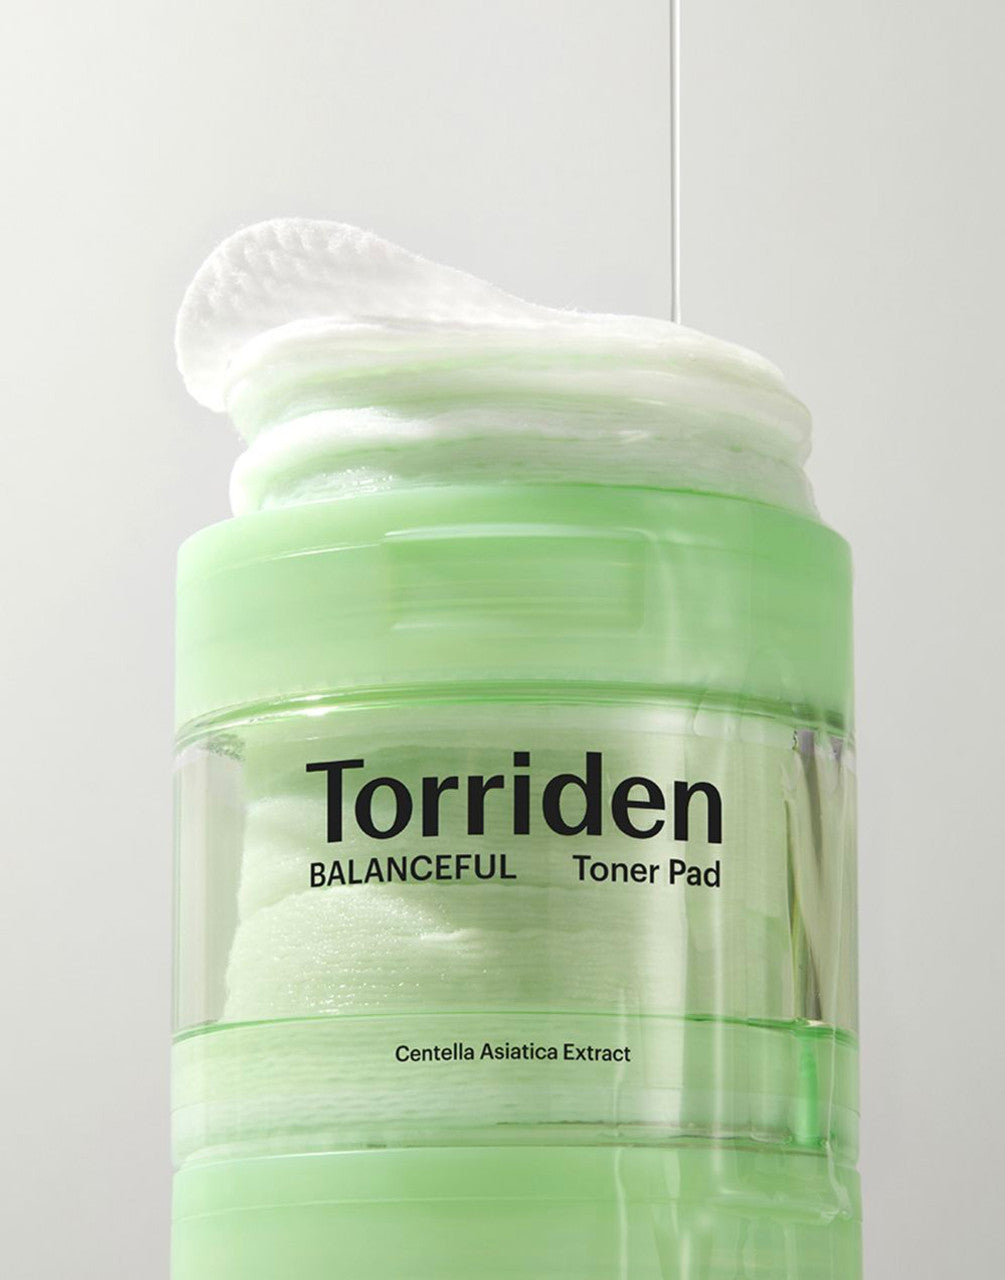 Balanceful Toner Pad by Torriden